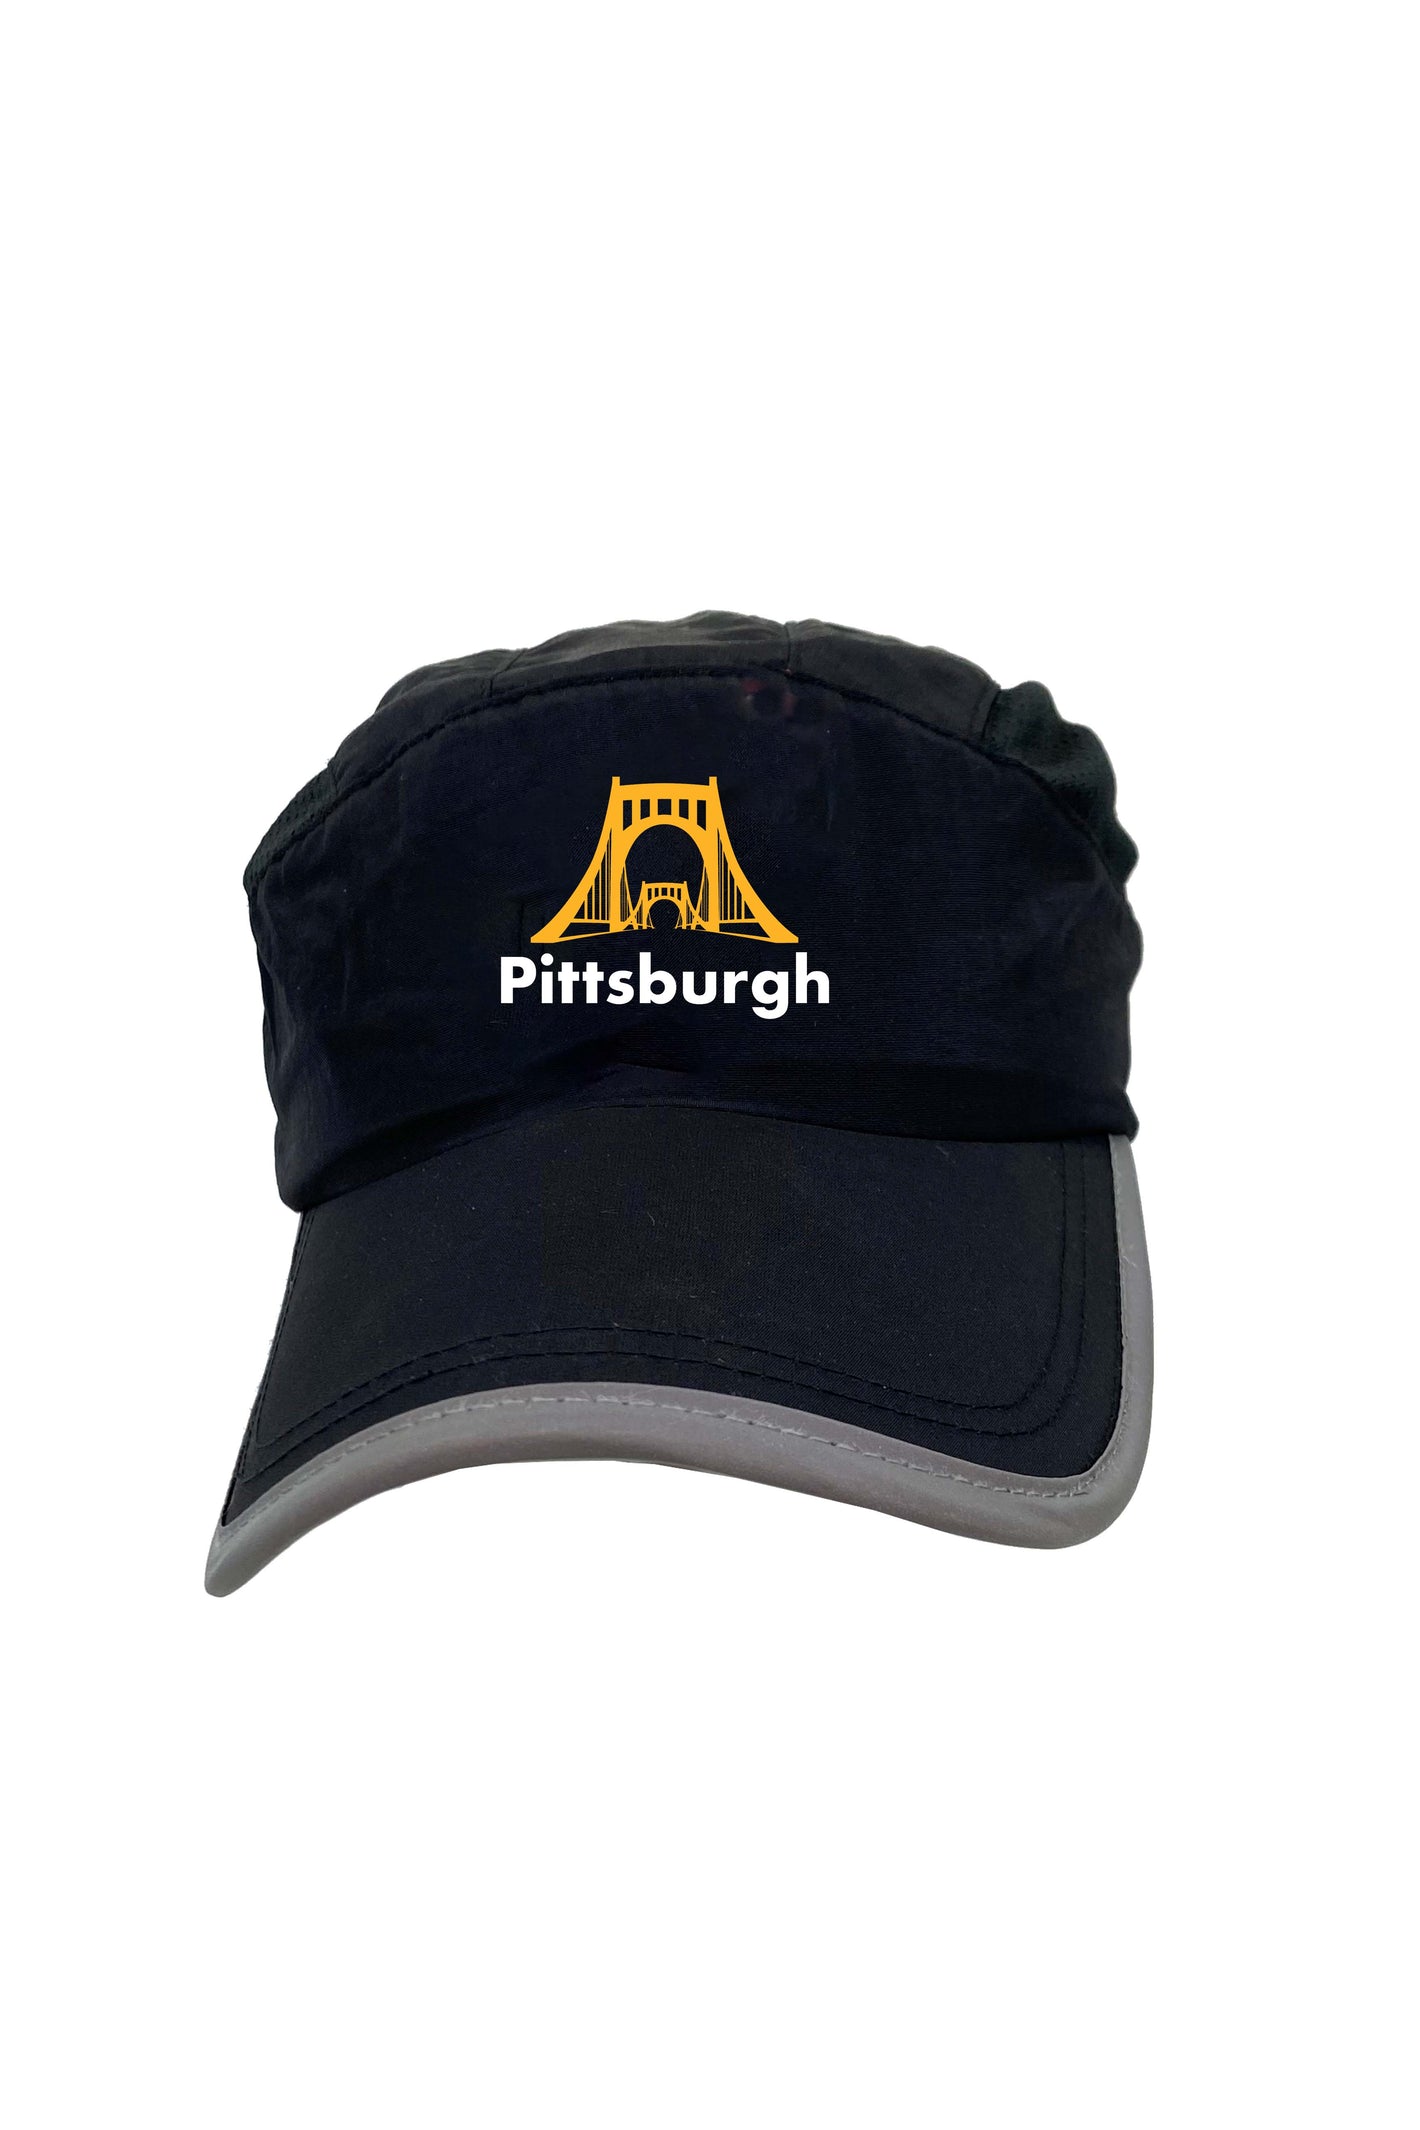 Pittsburgh Bridge Running Hat - Black